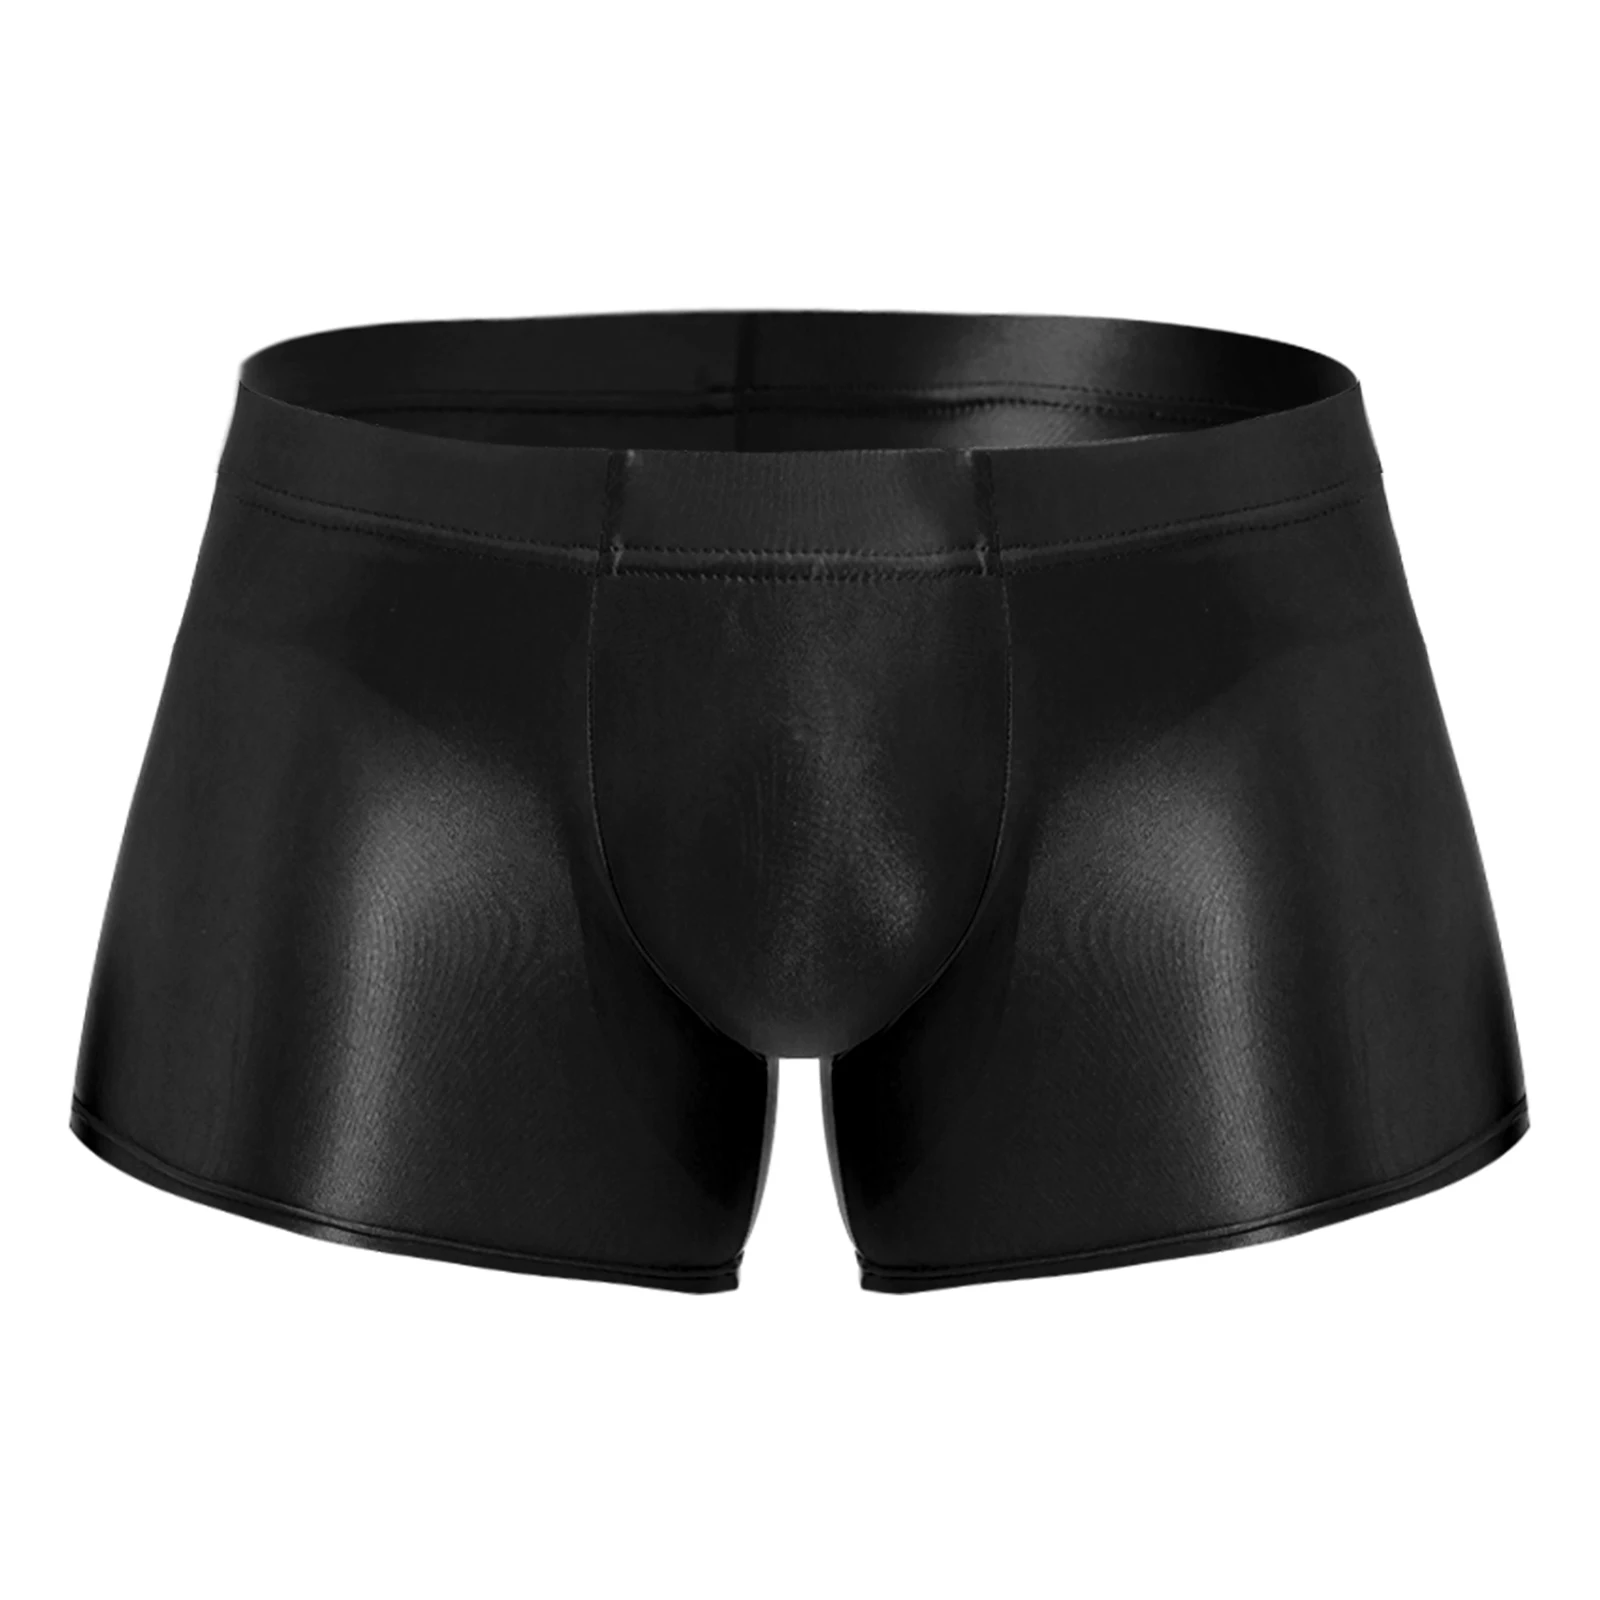 

YiZYiF Swimwear for Men Low Rise Glossy Boxer Briefs Underwear Male Swimming Trunks Bottom Boxers Shorts Bike Tights Underpants